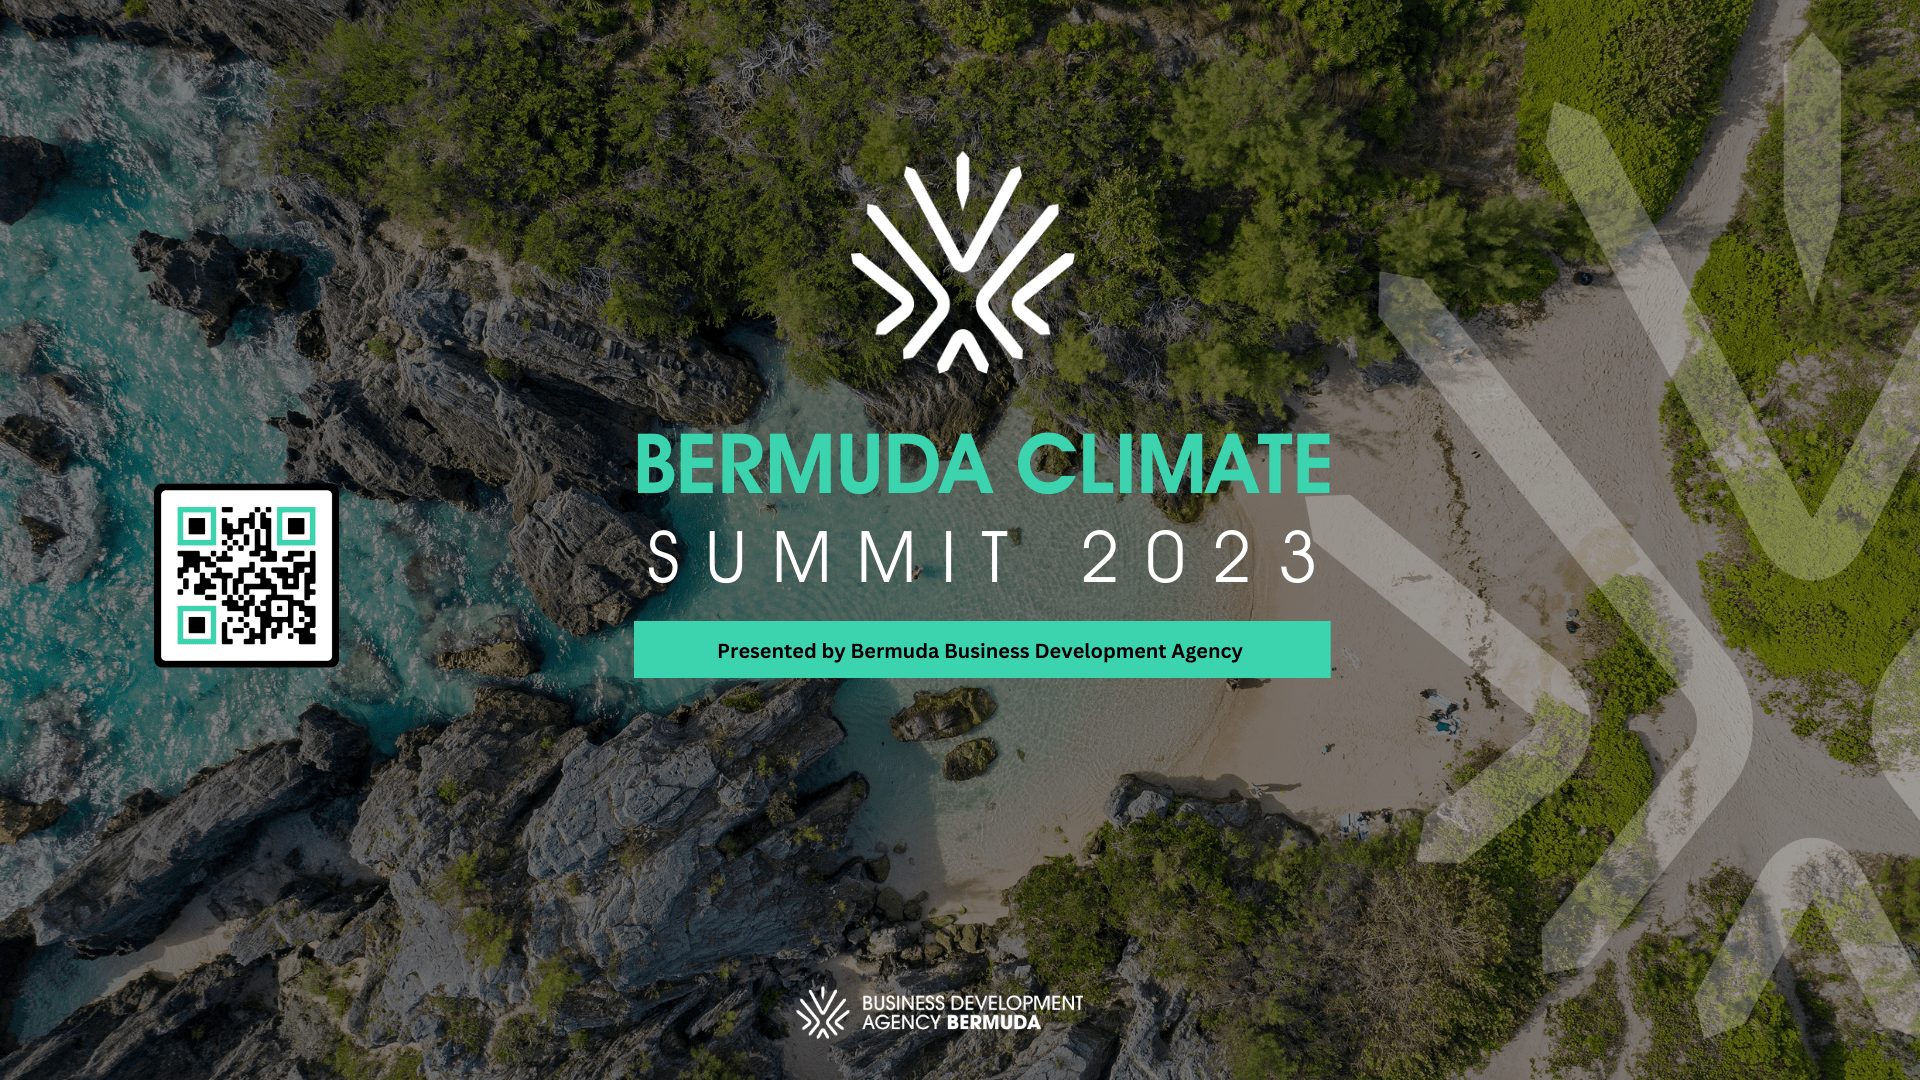 Deputy Premier Roban to Kick Off Bermuda Climate Summit, June 26-27